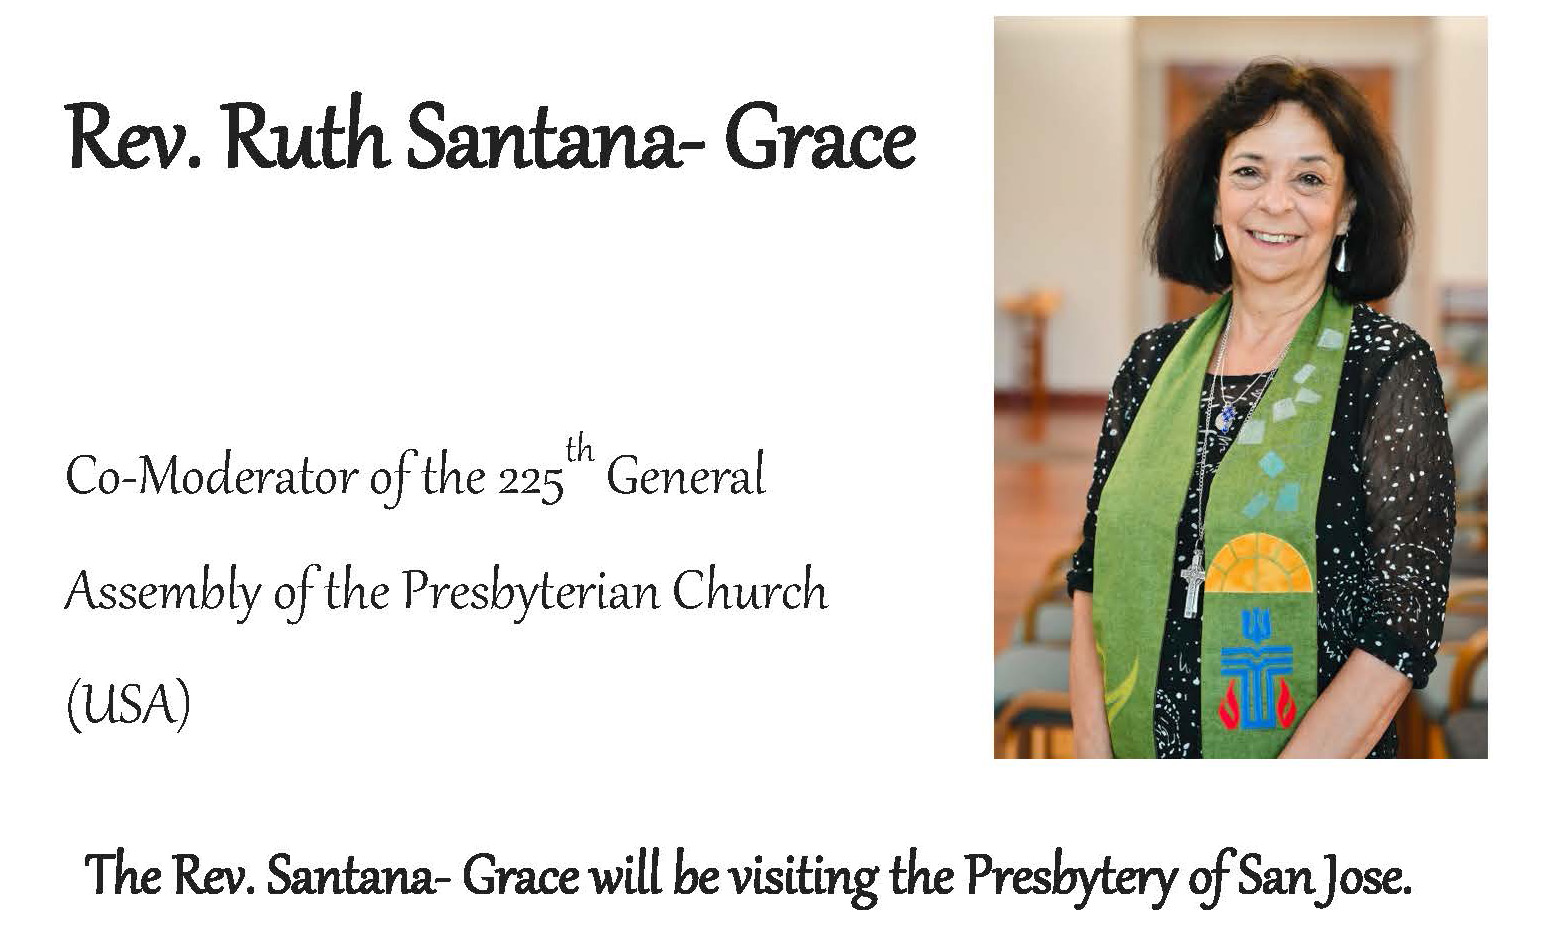 Portrait of Rev. Ruth Santana-Grace